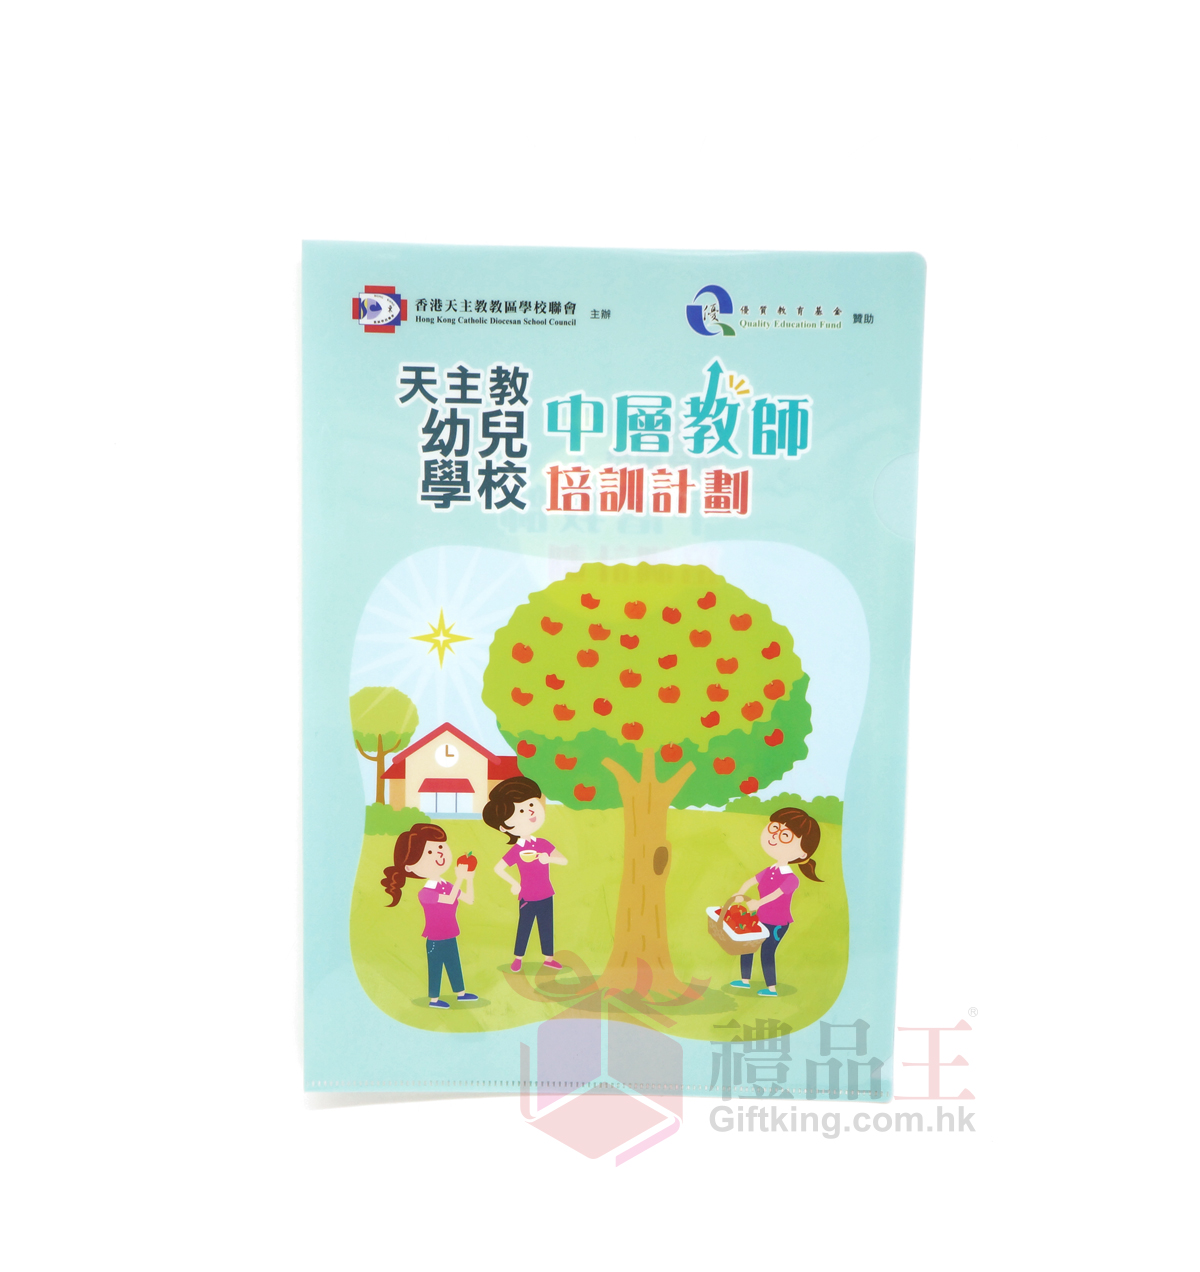 Hong Kong Catholic Diocesan Schools Council A4Folder (Stationery Gift)